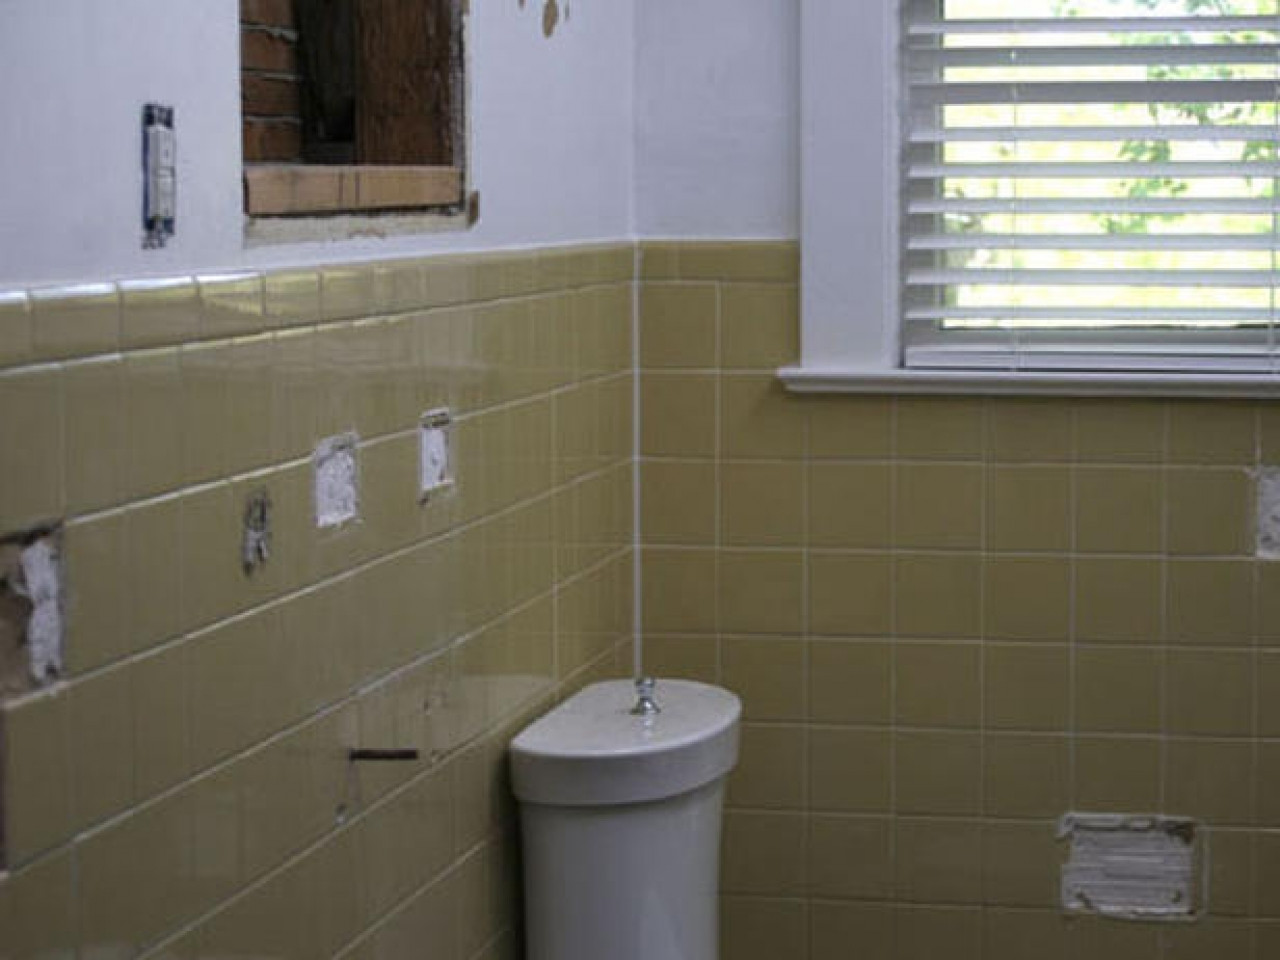 Cover Bathroom Tile Floor
 Livingroomideas cover bathroom tile with wainscoting